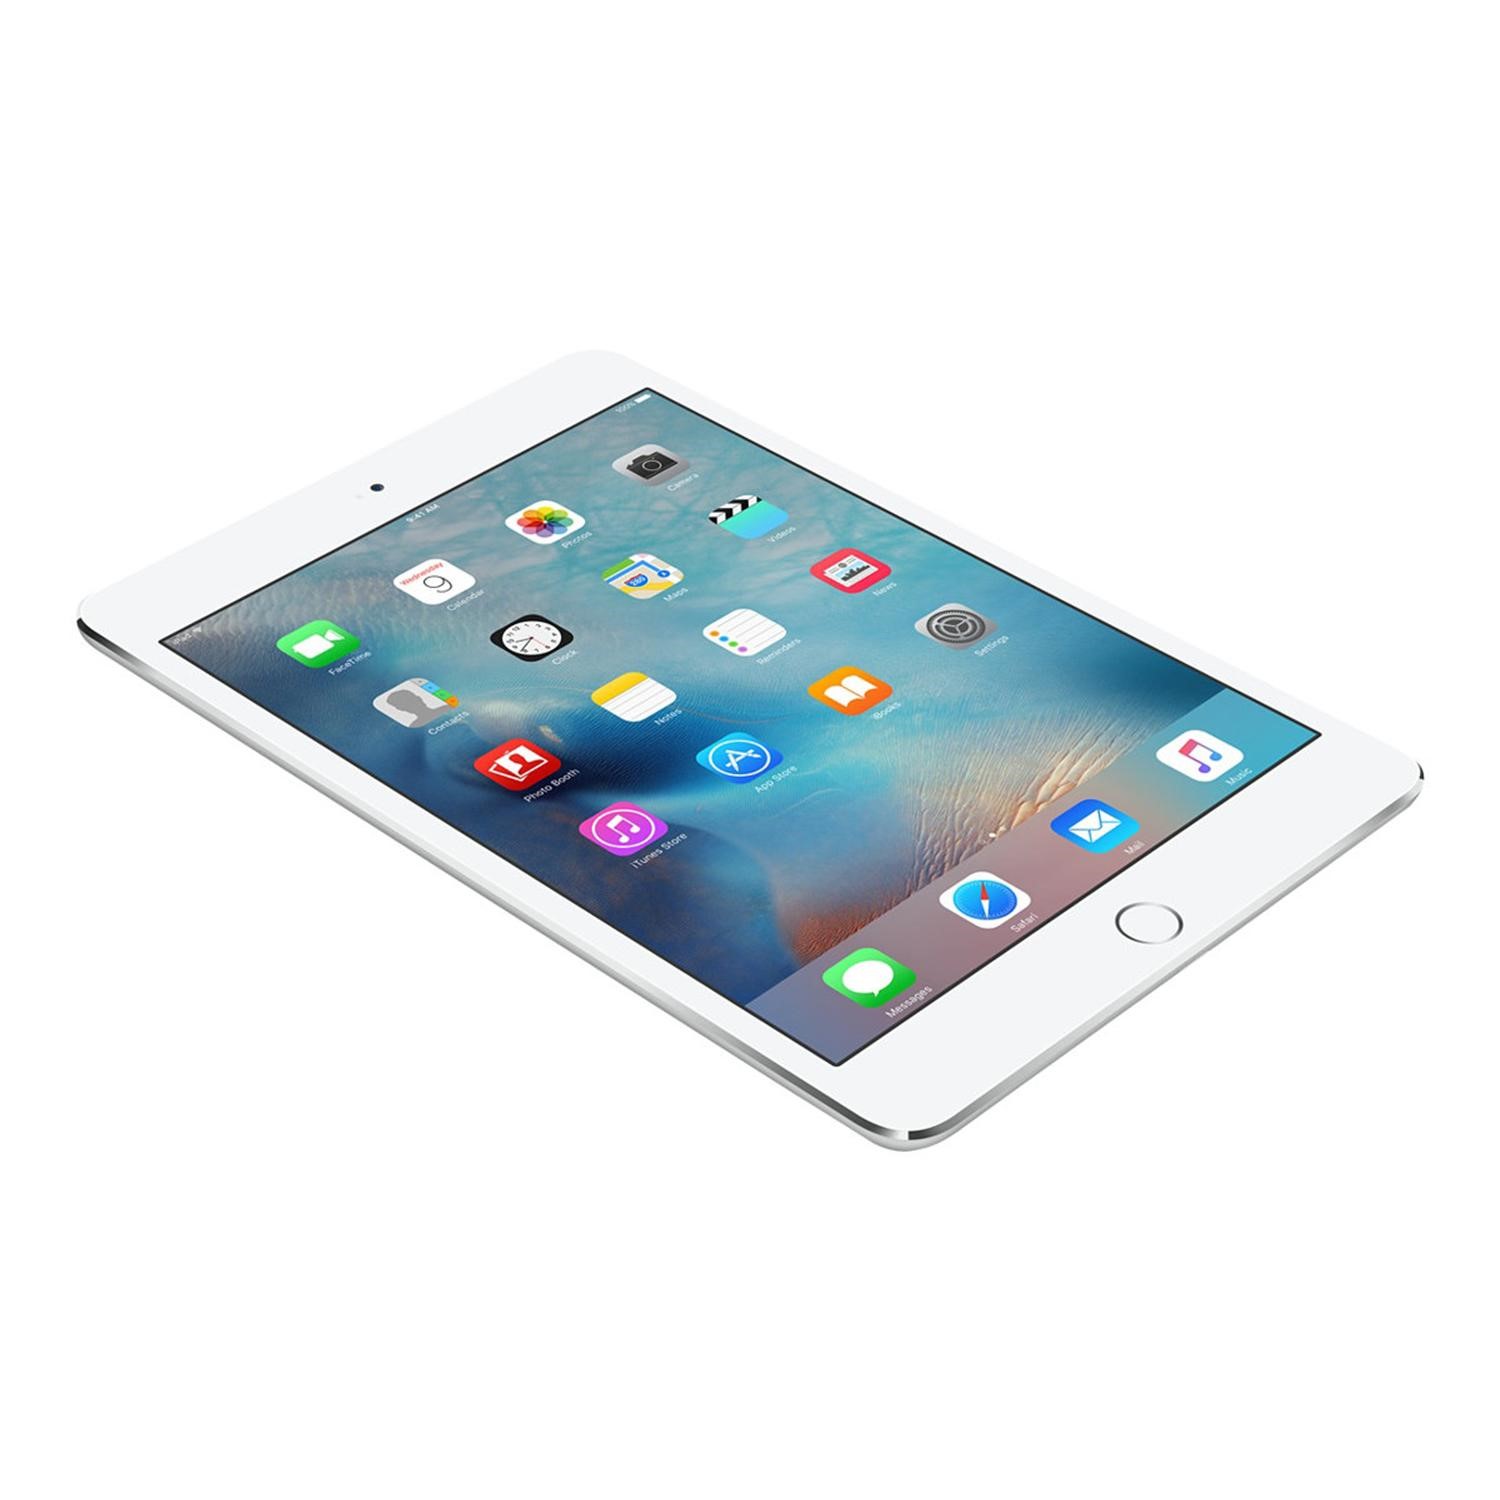 Apple Ipad Mini 4 32GB Wifi 7.9 Inch iOS Tablet - Silver - Laptops